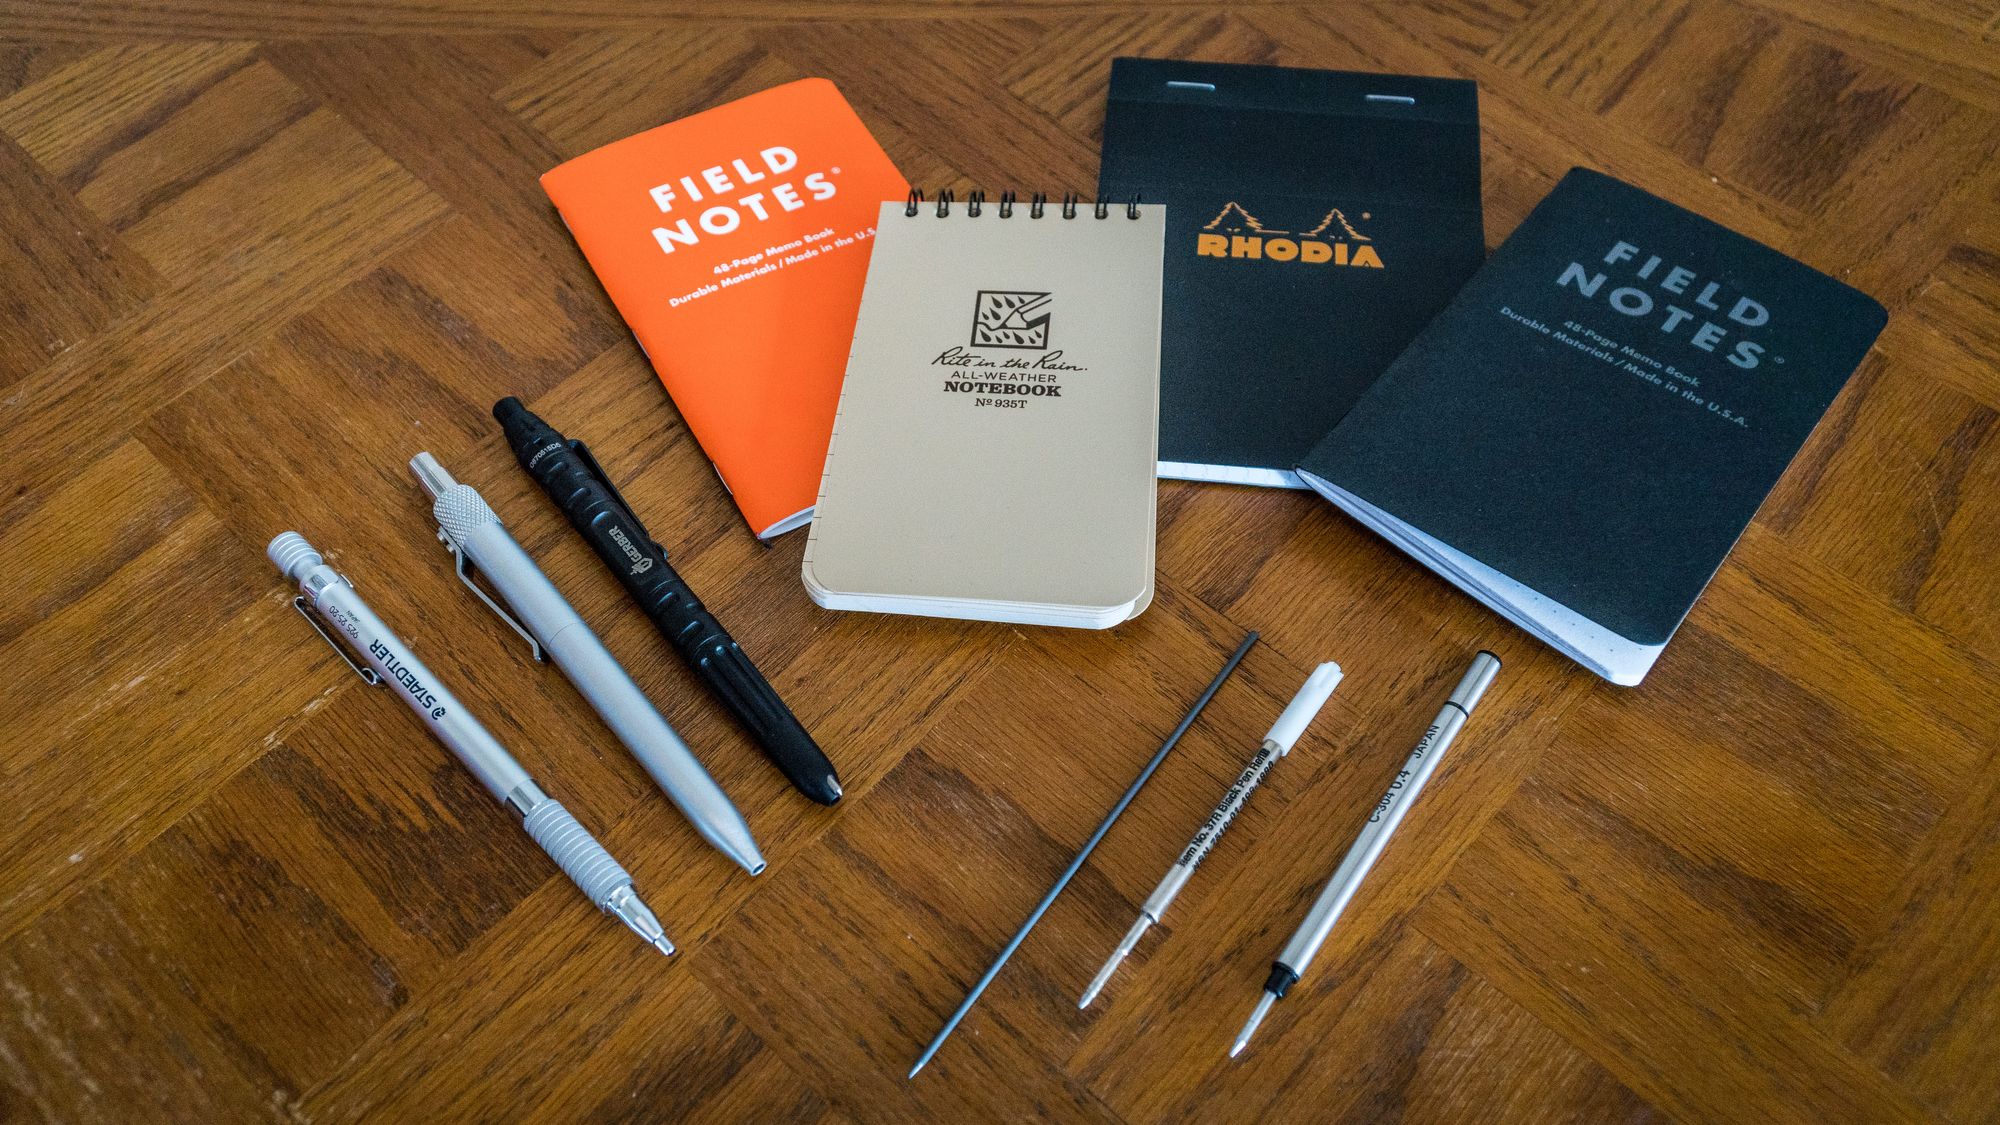 Four notebooks, 3 pens, 3 pen refills